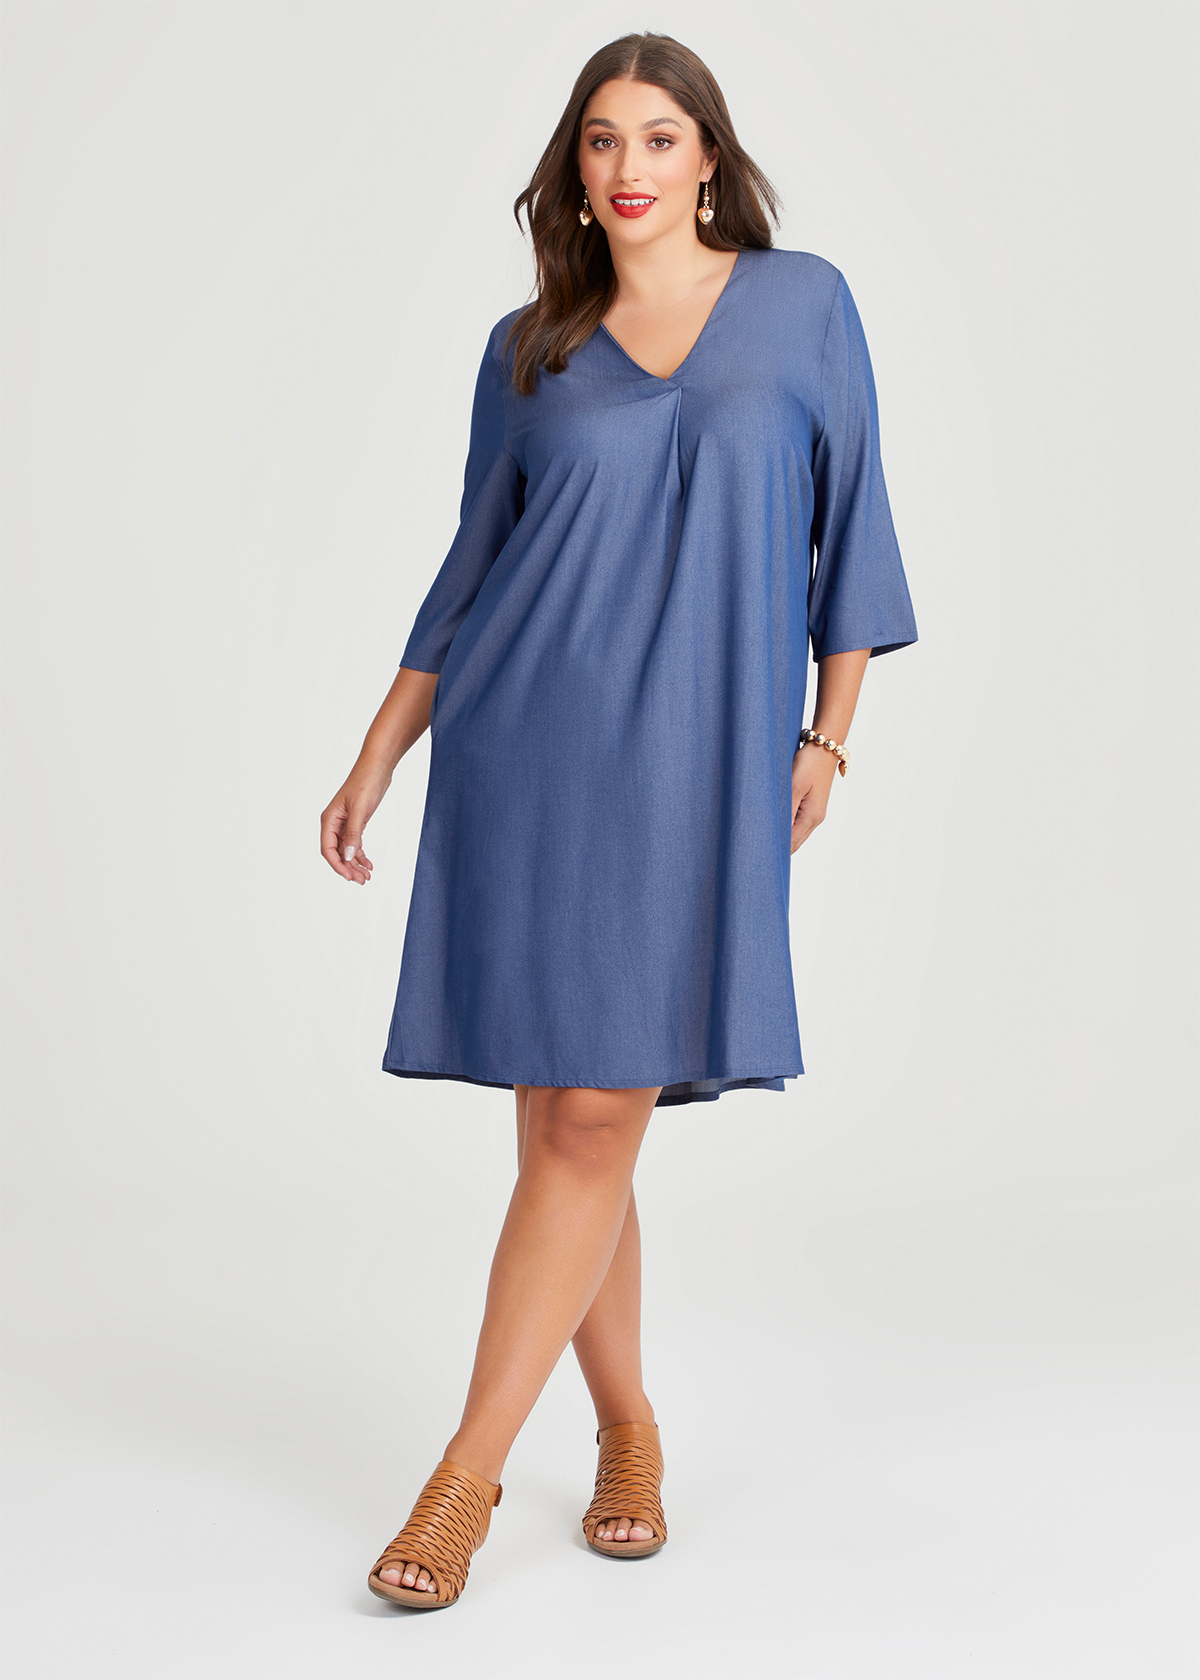 Shop Plus Size Denim Stretch Natural Dress in Blue | Sizes 12-30 ...